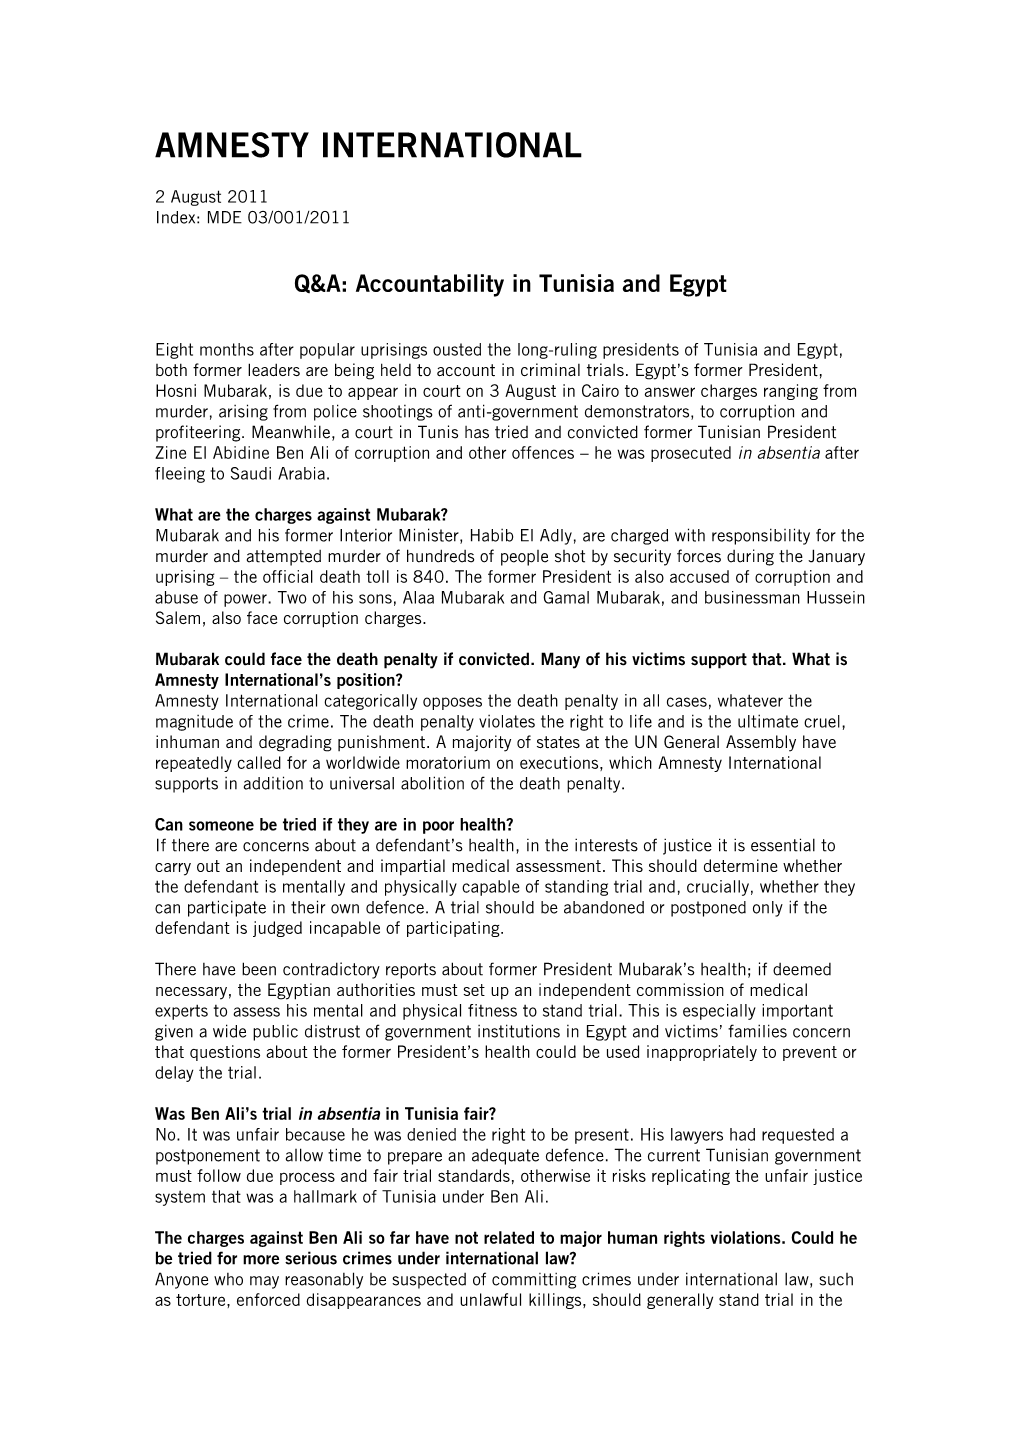 Accountability in Tunisia and Egypt